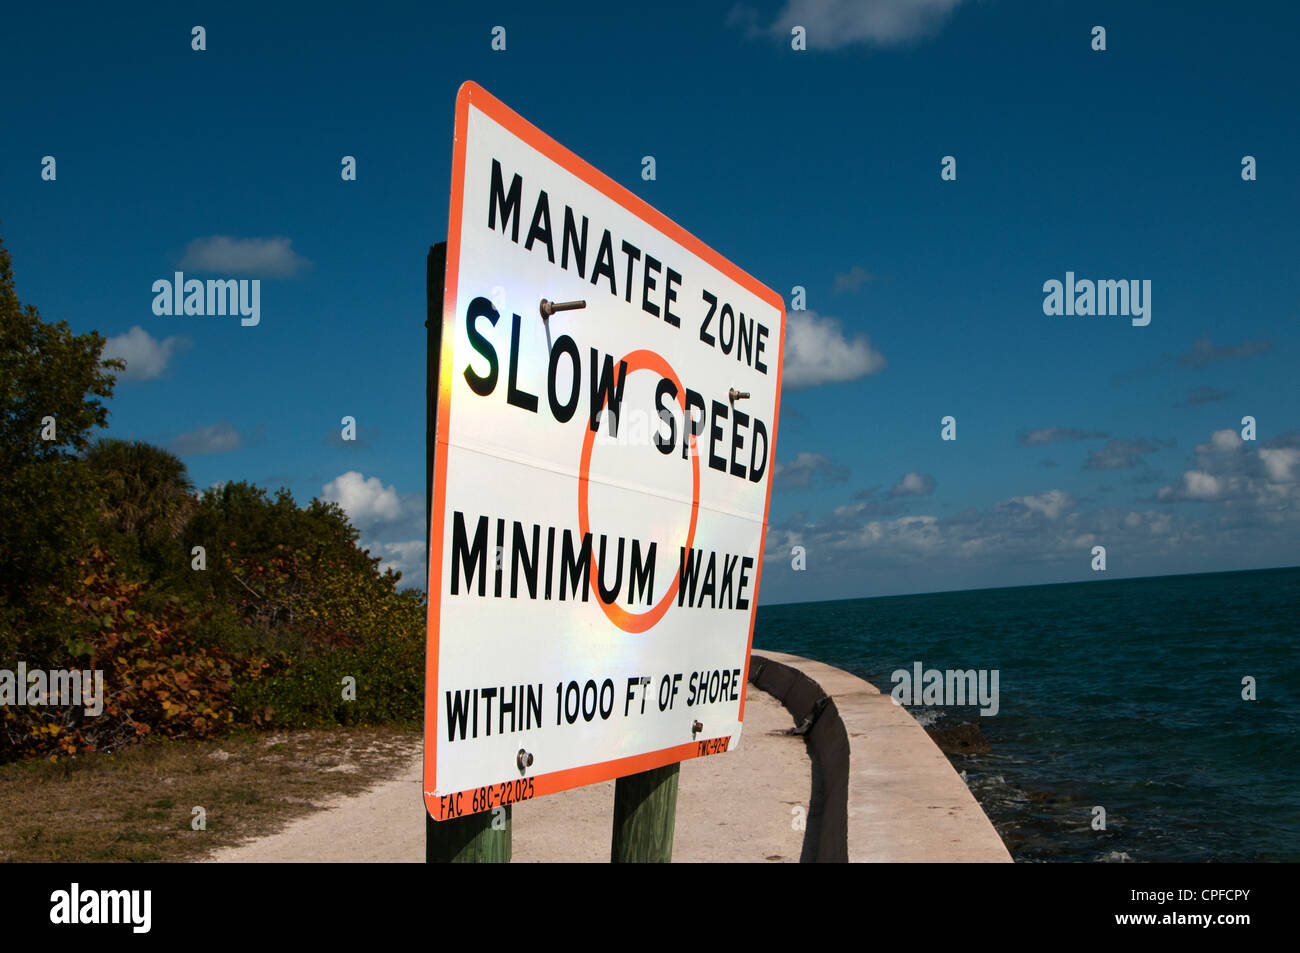 Manatee zone sign. Stock Photo